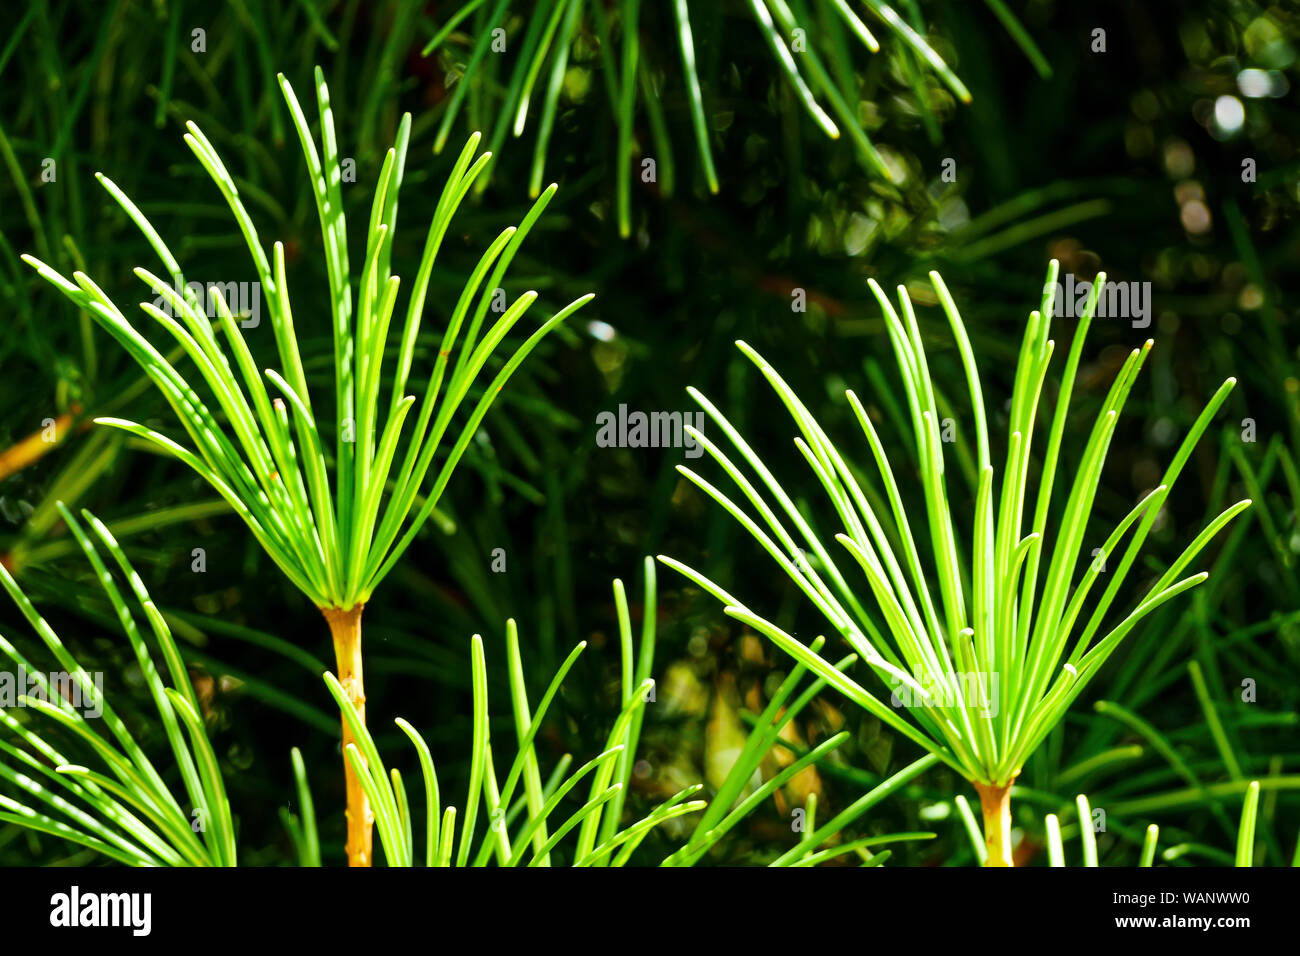 Japanese Umbrella Pine - Sciadopitys verticillata, La Bambouseraie - Bamboo park, Prafrance, Anduze, Gard, France Stock Photo